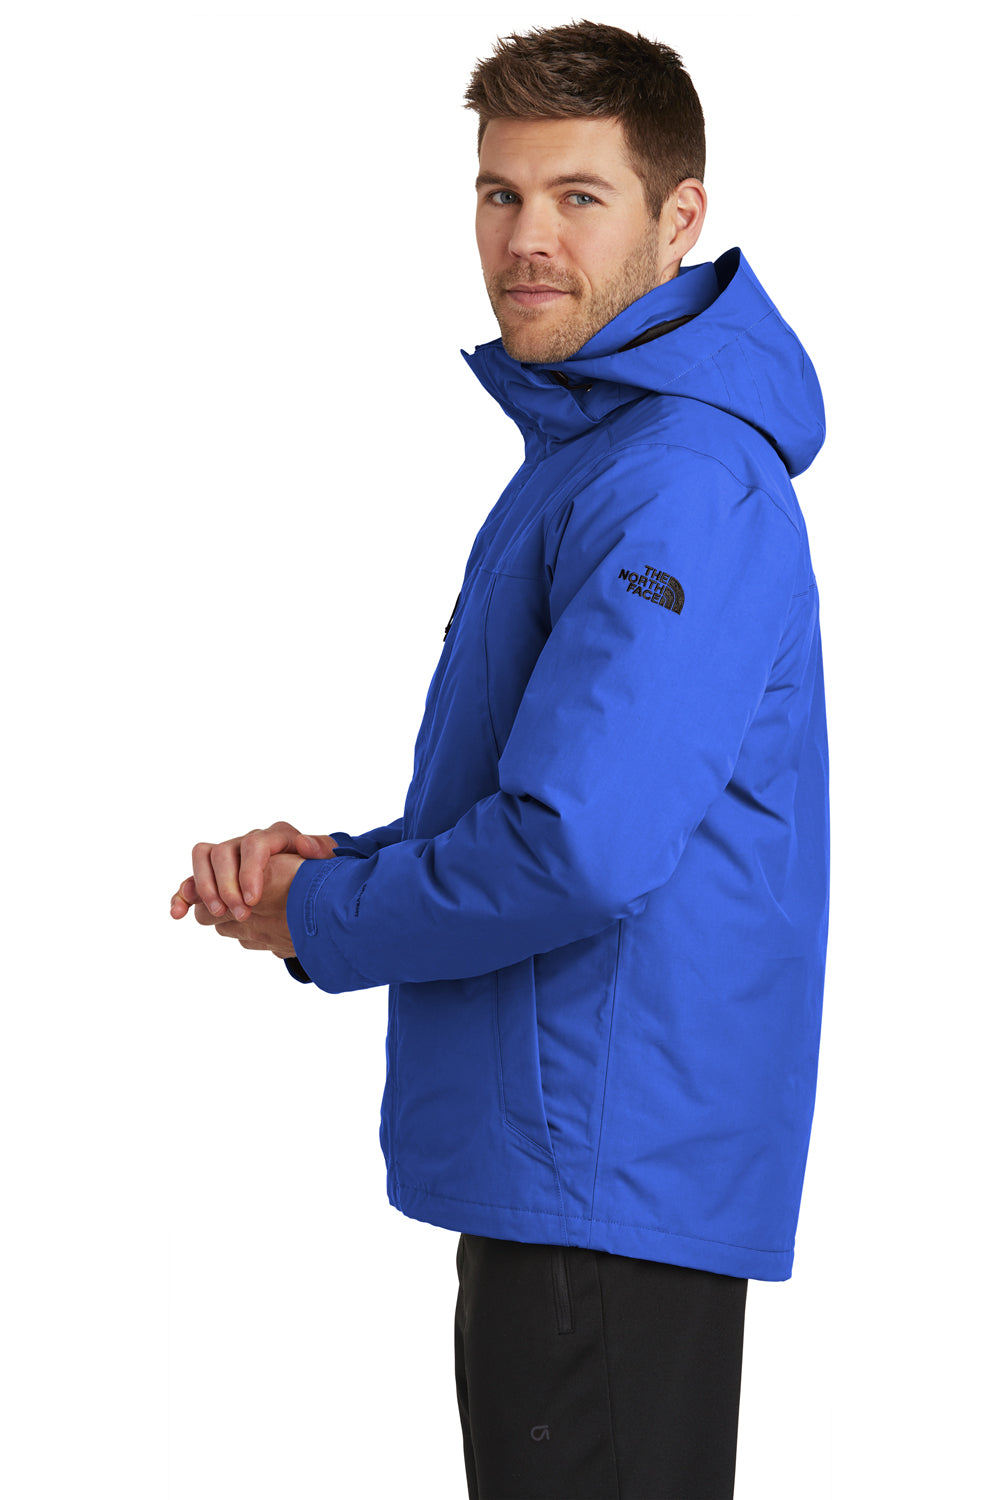 Onvoorziene omstandigheden kraam vragen The North Face NF0A3VHR Mens Monster Blue Traverse Triclimate 3-in-1  Waterproof Full Zip Hooded Jacket — BigTopShirtShop.com